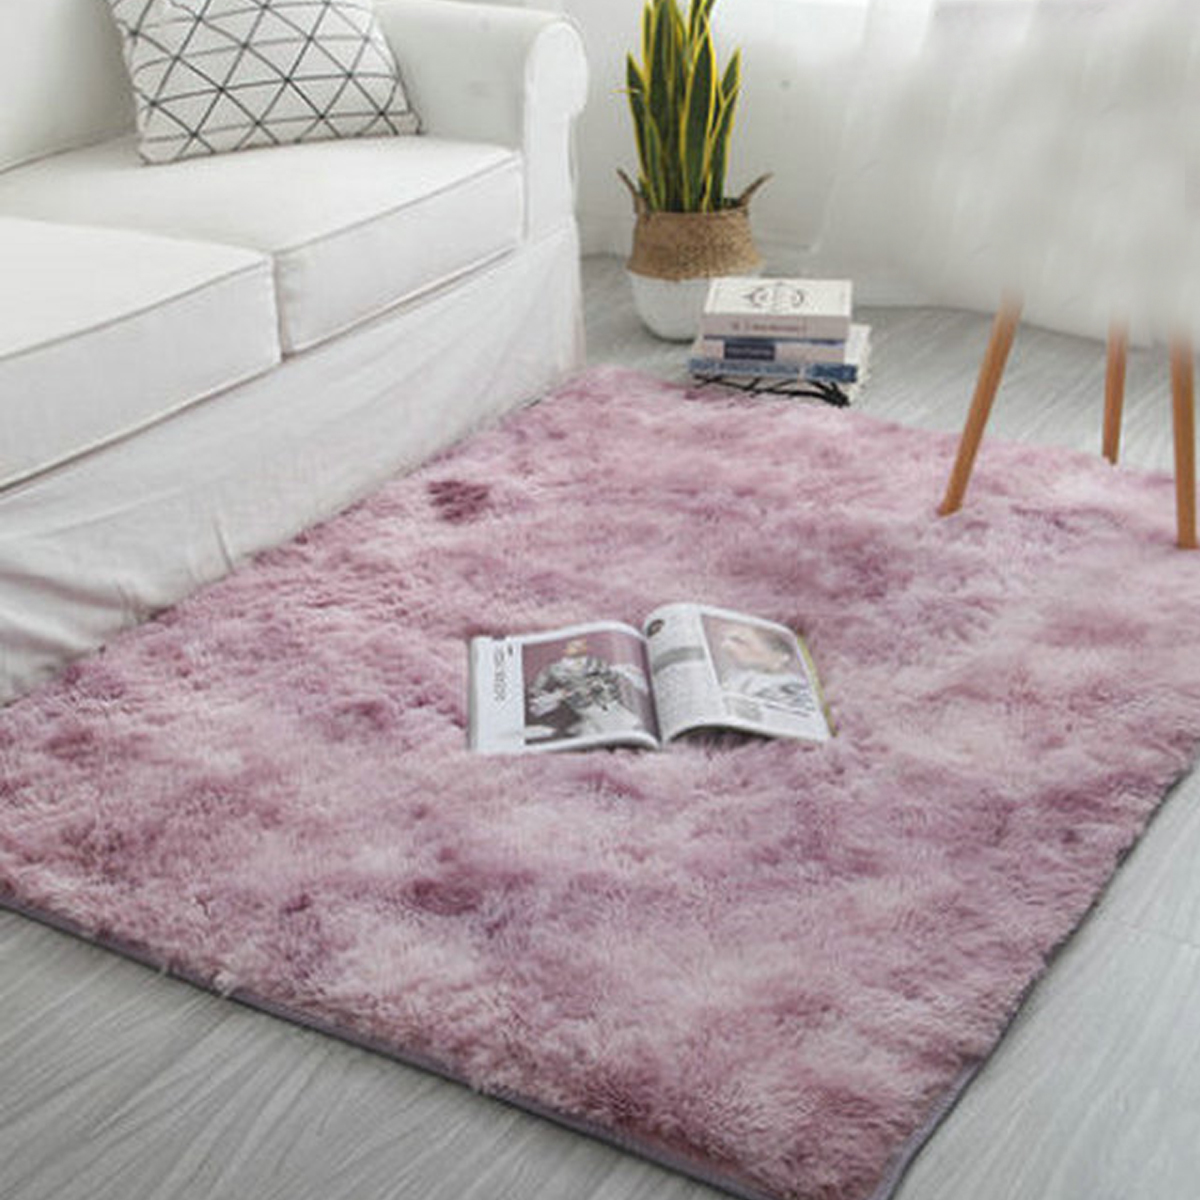 150X240CM-Tie-dyed-Gradient-Carpet-Long-Haired-Anti-slip-Carpet-For-Bedroom-Living-Room-Study-Room-1919744-11